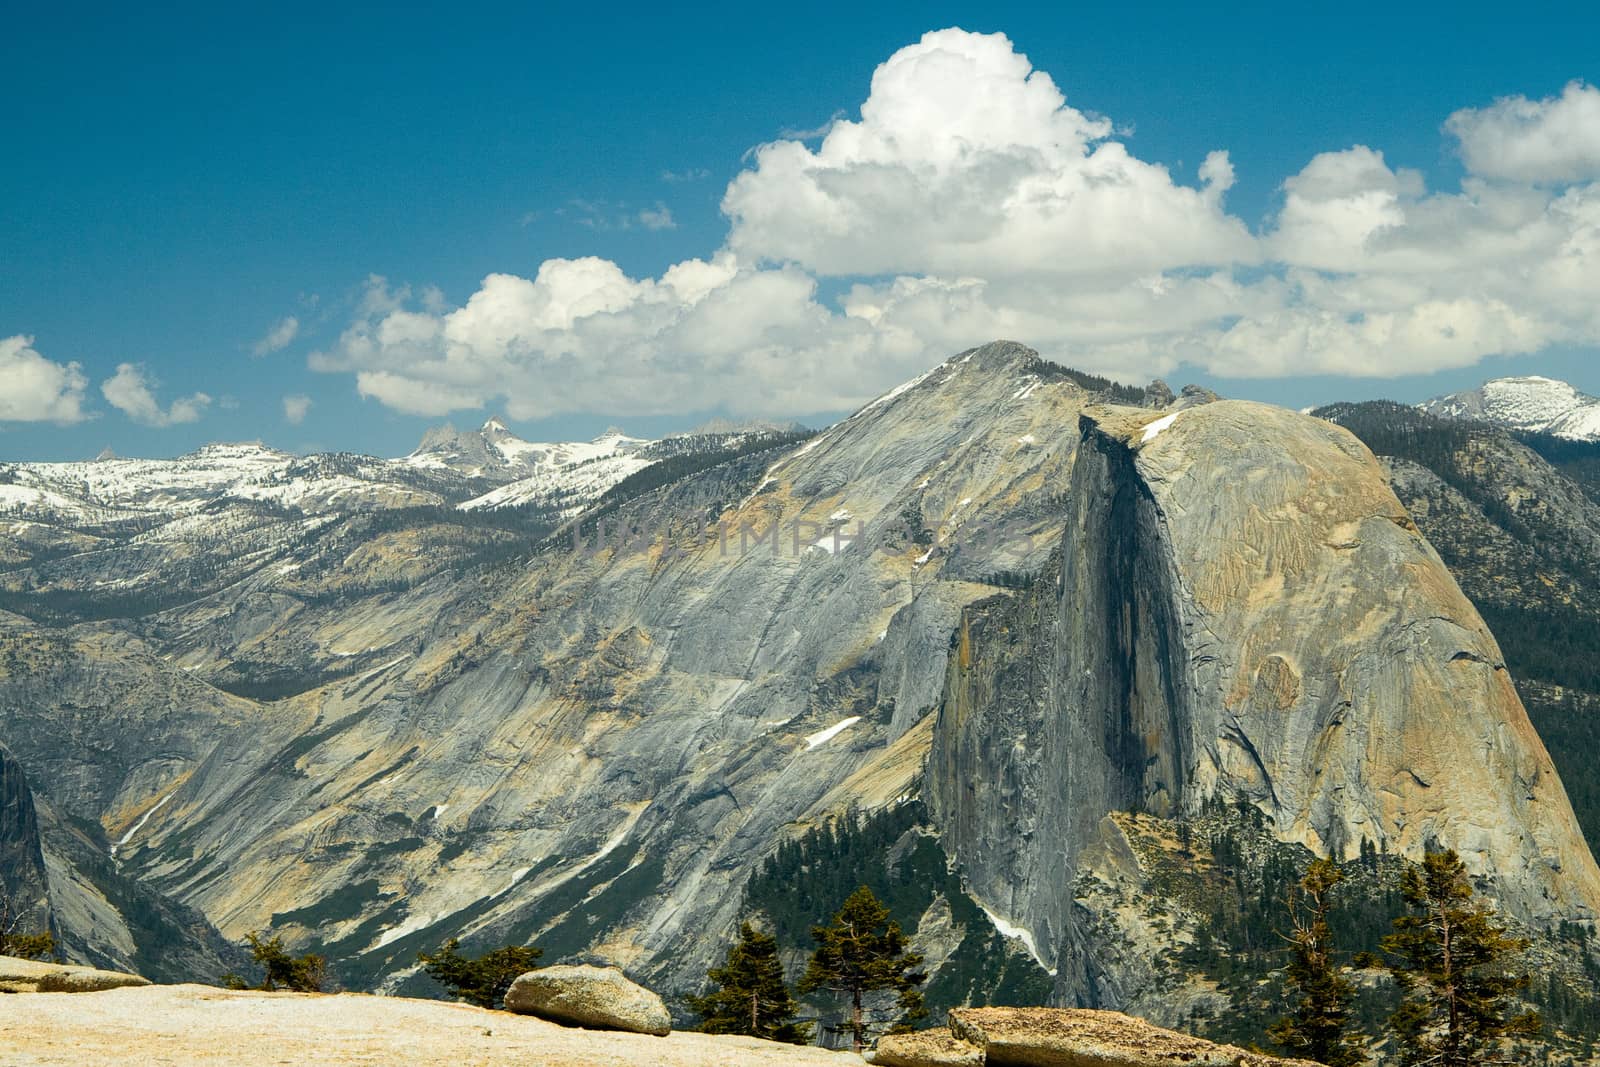 View from the Sentinel Dome in Yosemite, California.